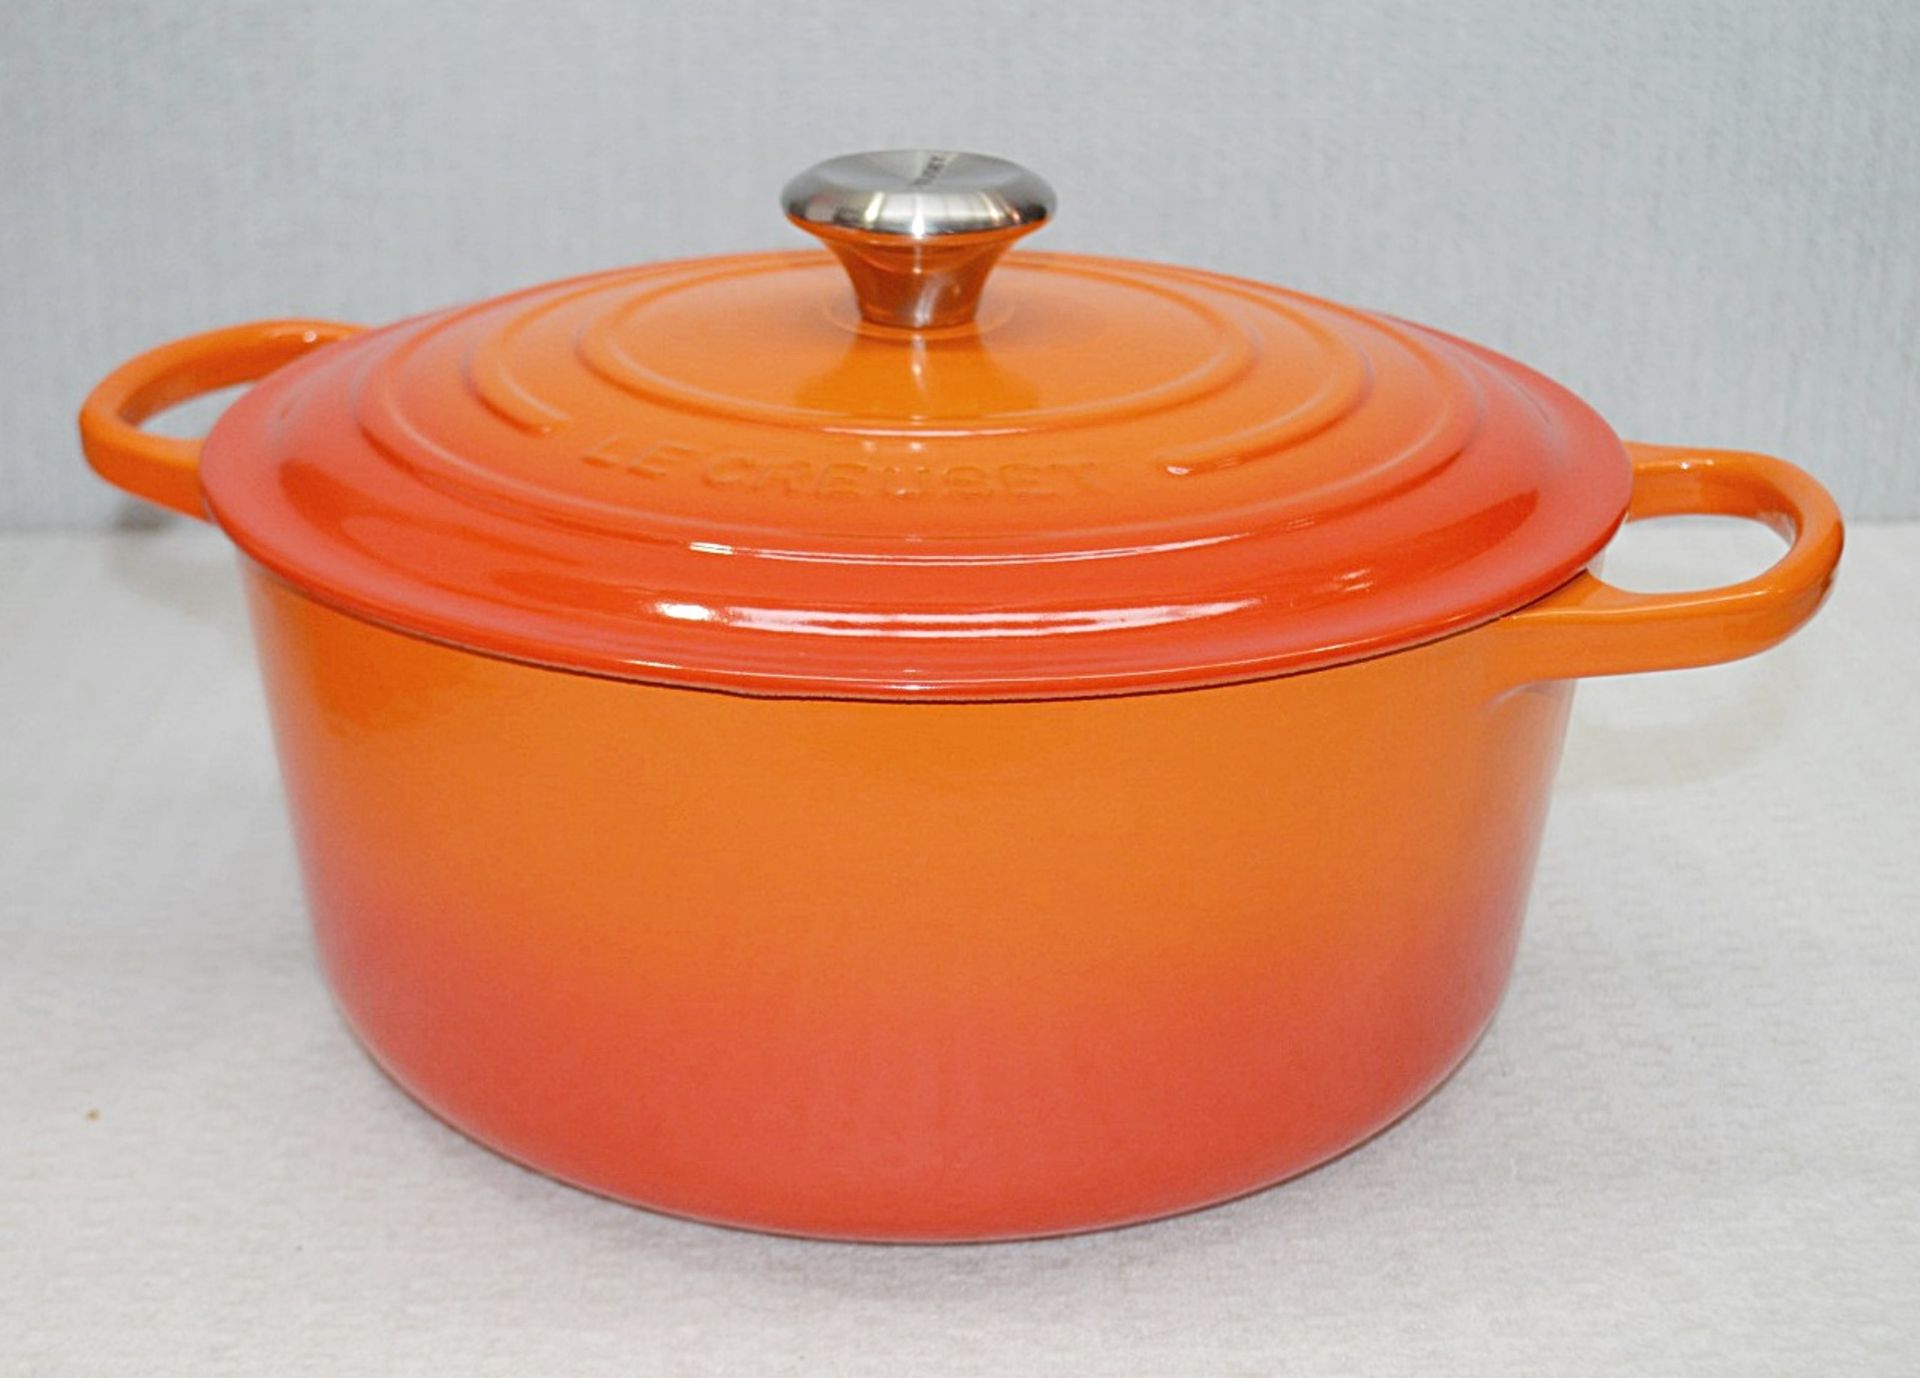 1 x Le Creuset Enamelled Cast Iron 28cm Casserole Dish In Volcanic Flame Orange - RRP £305.00